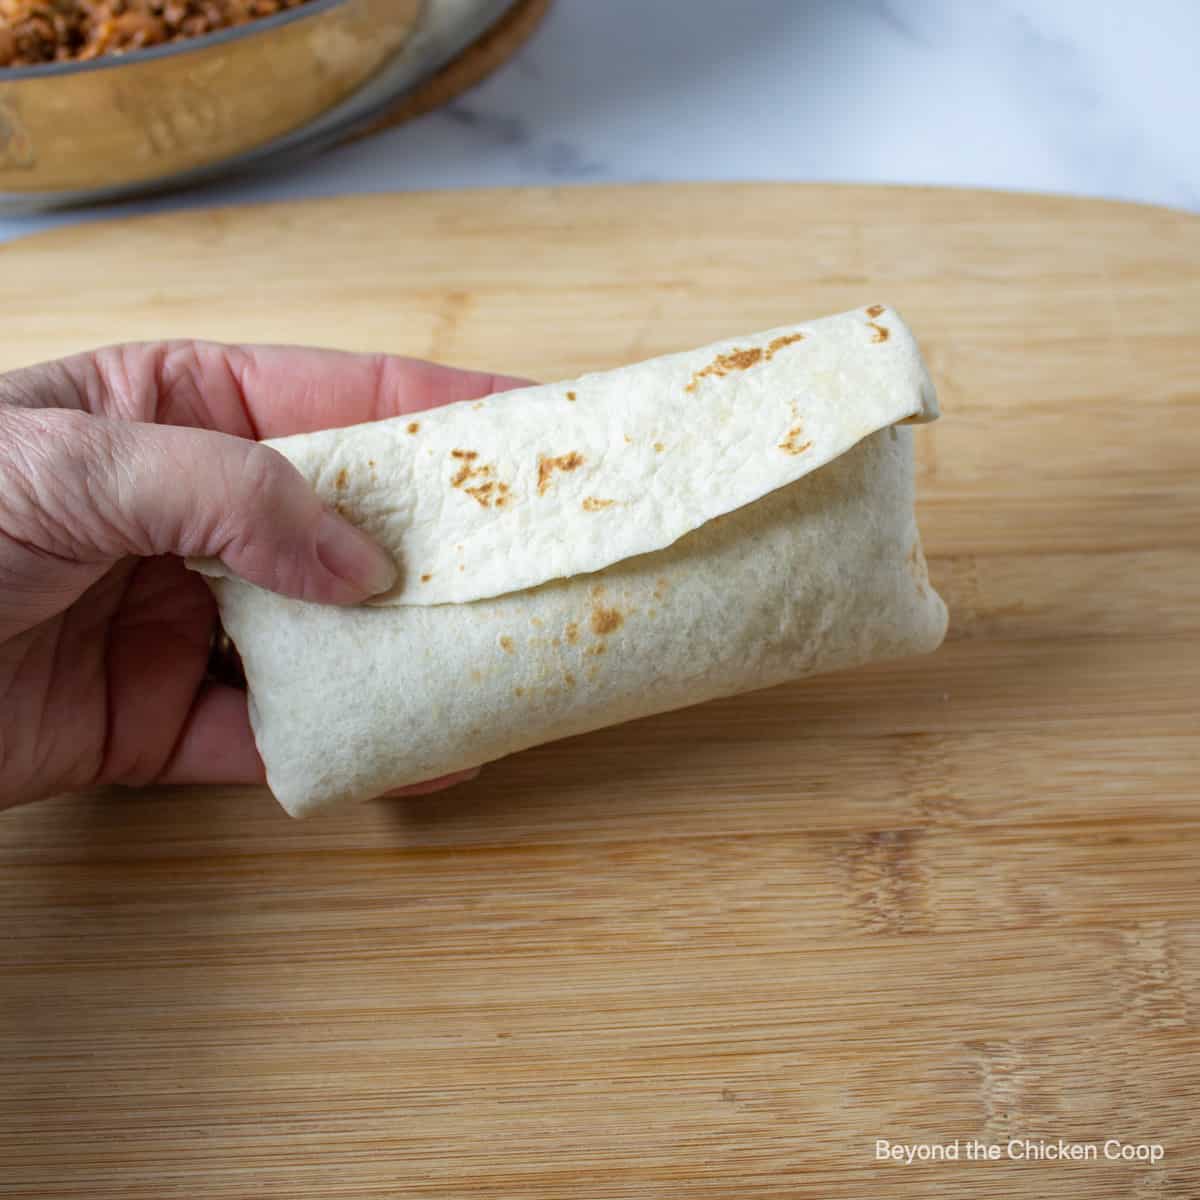 A filled and folded burrito.